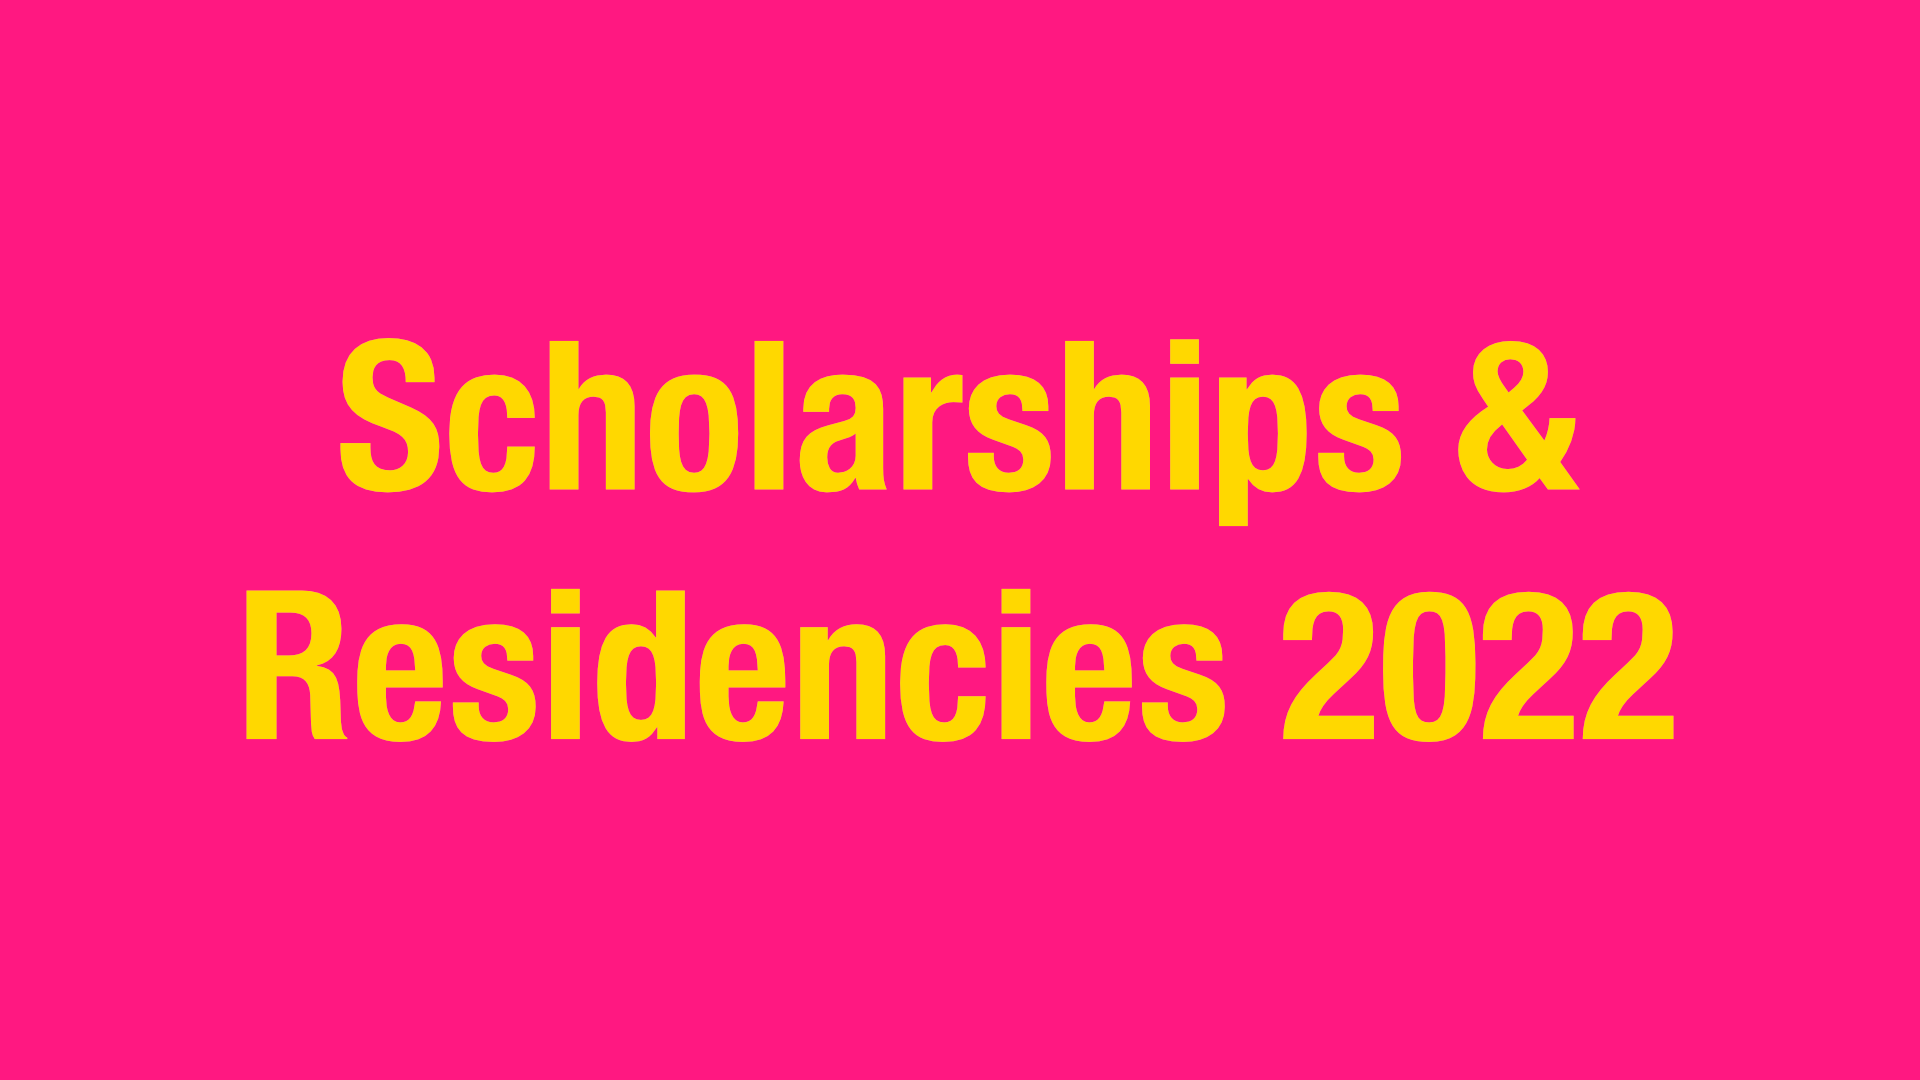 Scholarships & Residencies 2022